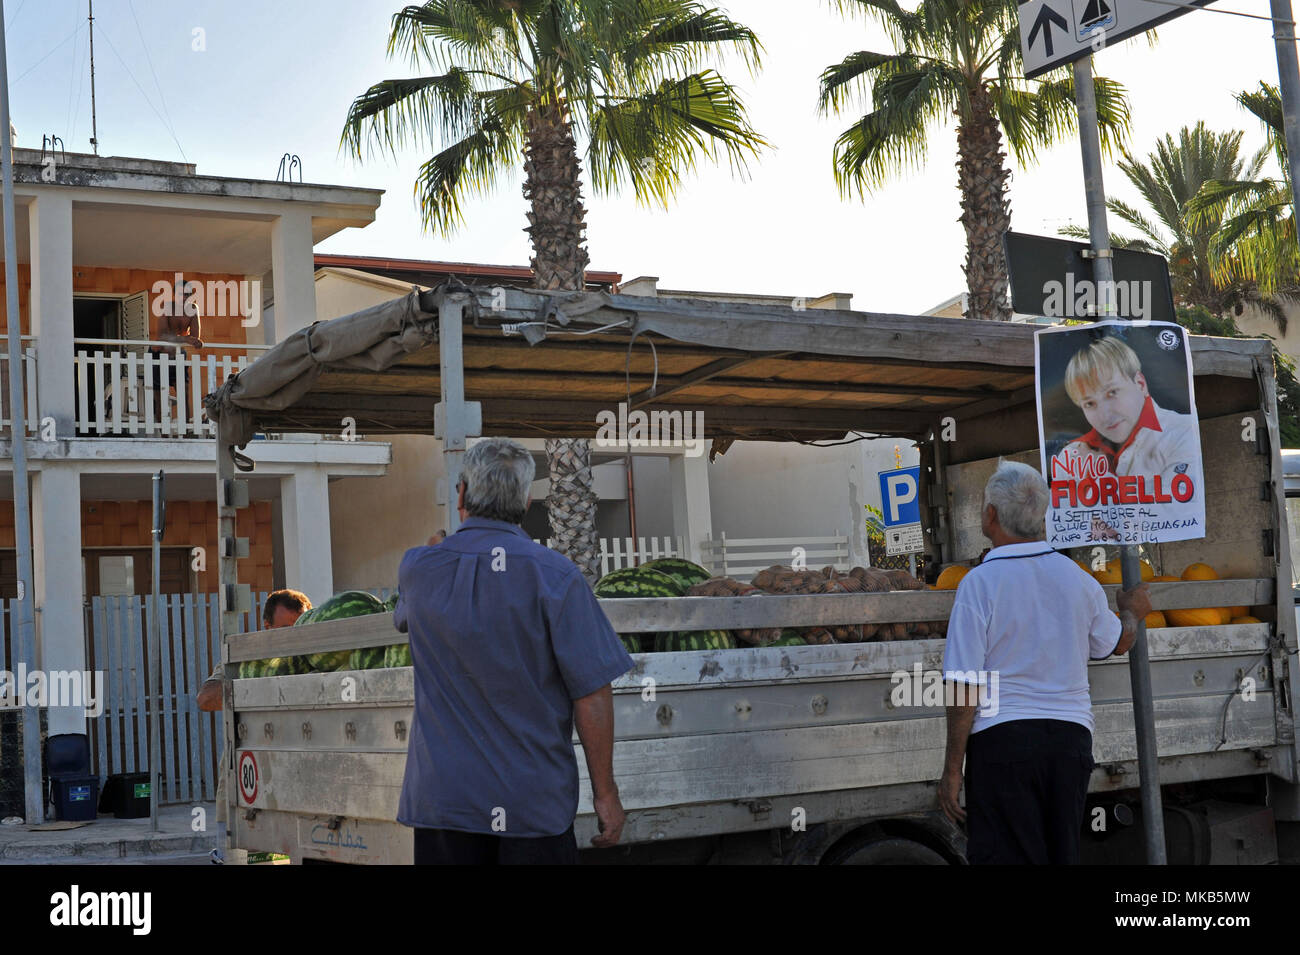 Porto Cesareo, itinerant vendor selling waremelon and potates. Italy Stock Photo